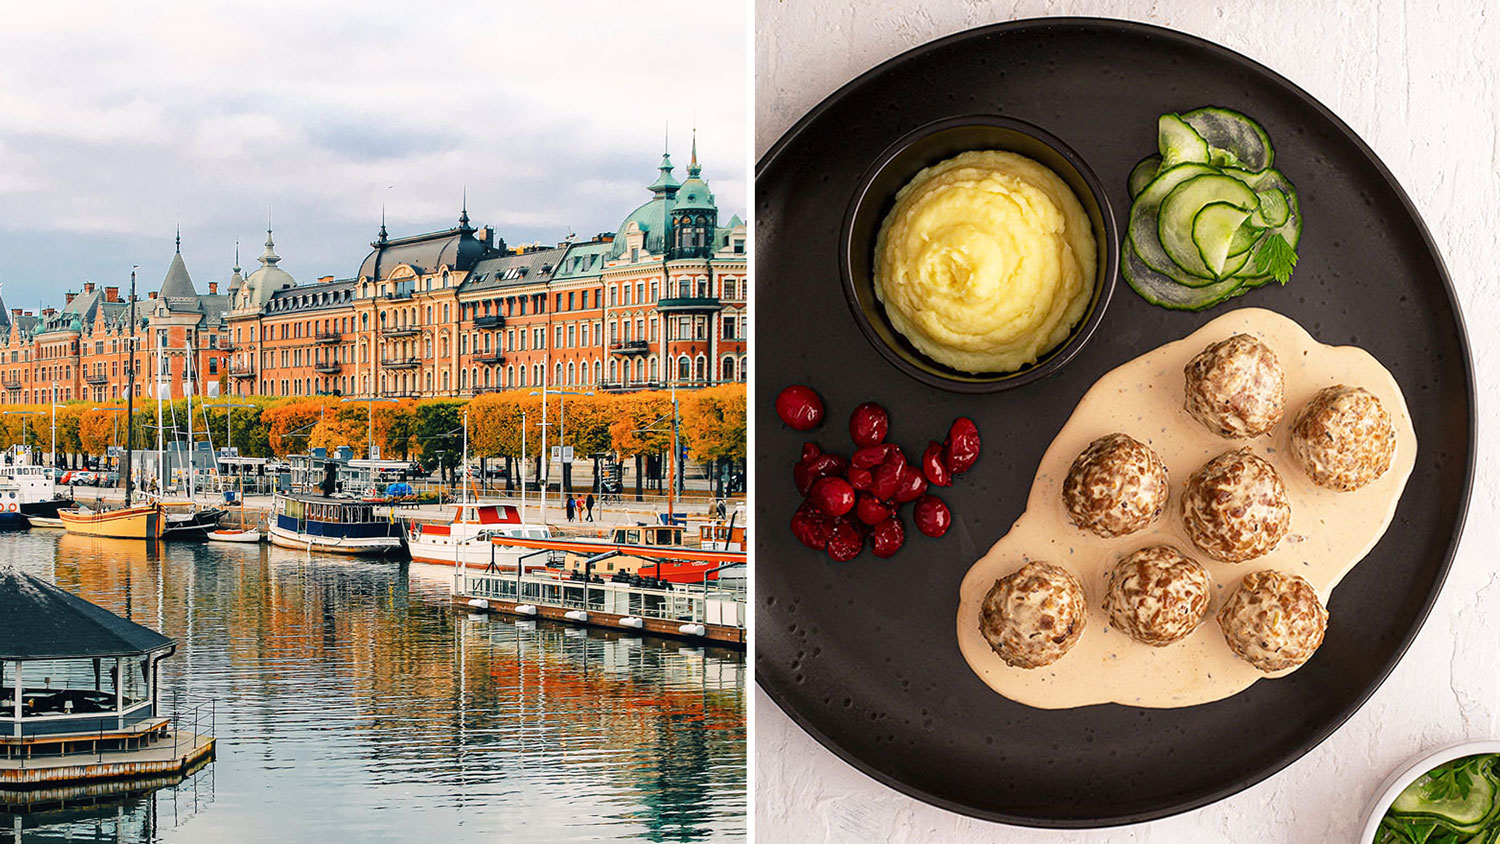 Swedish meatballs are an iconic Stockholm dish.